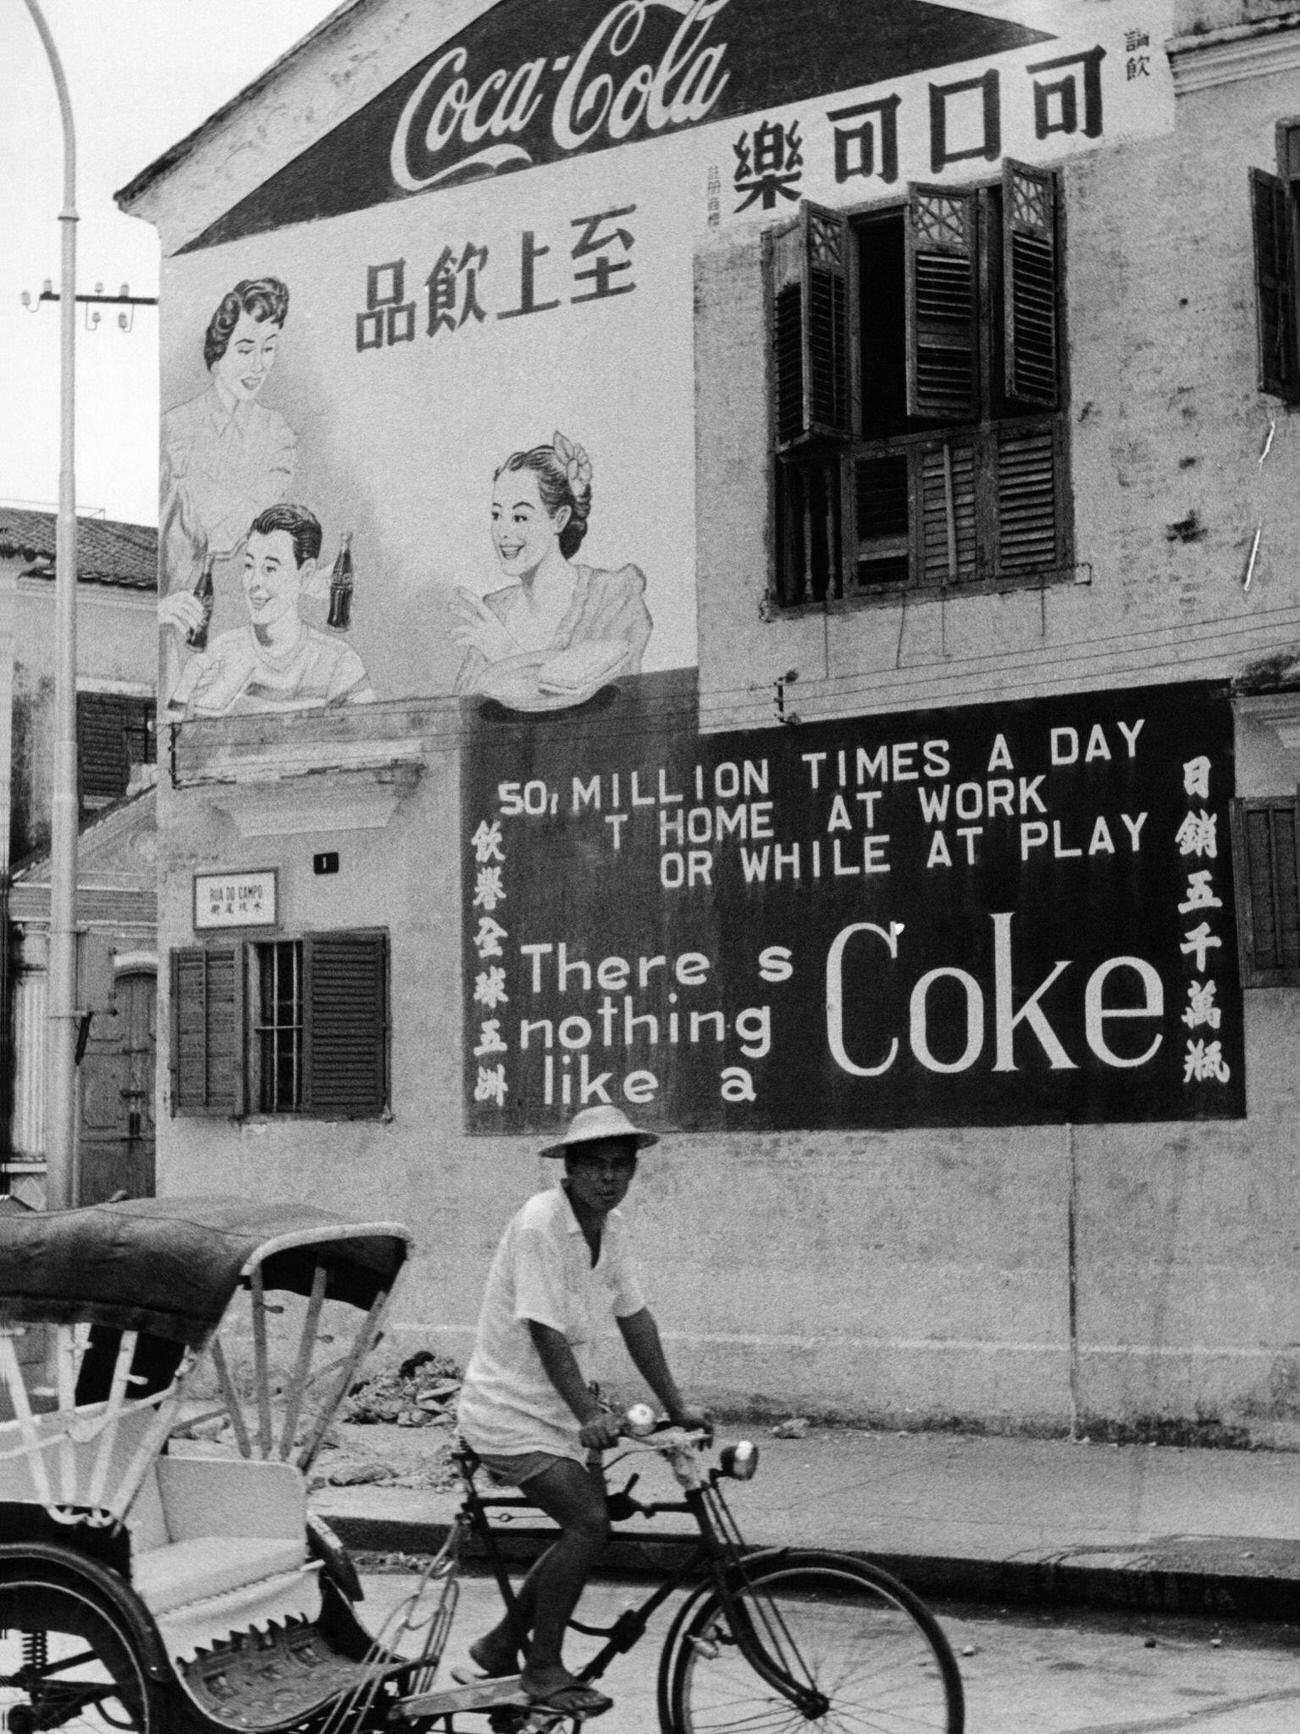 Coca-Cola advertisement on a house facade in Macao.